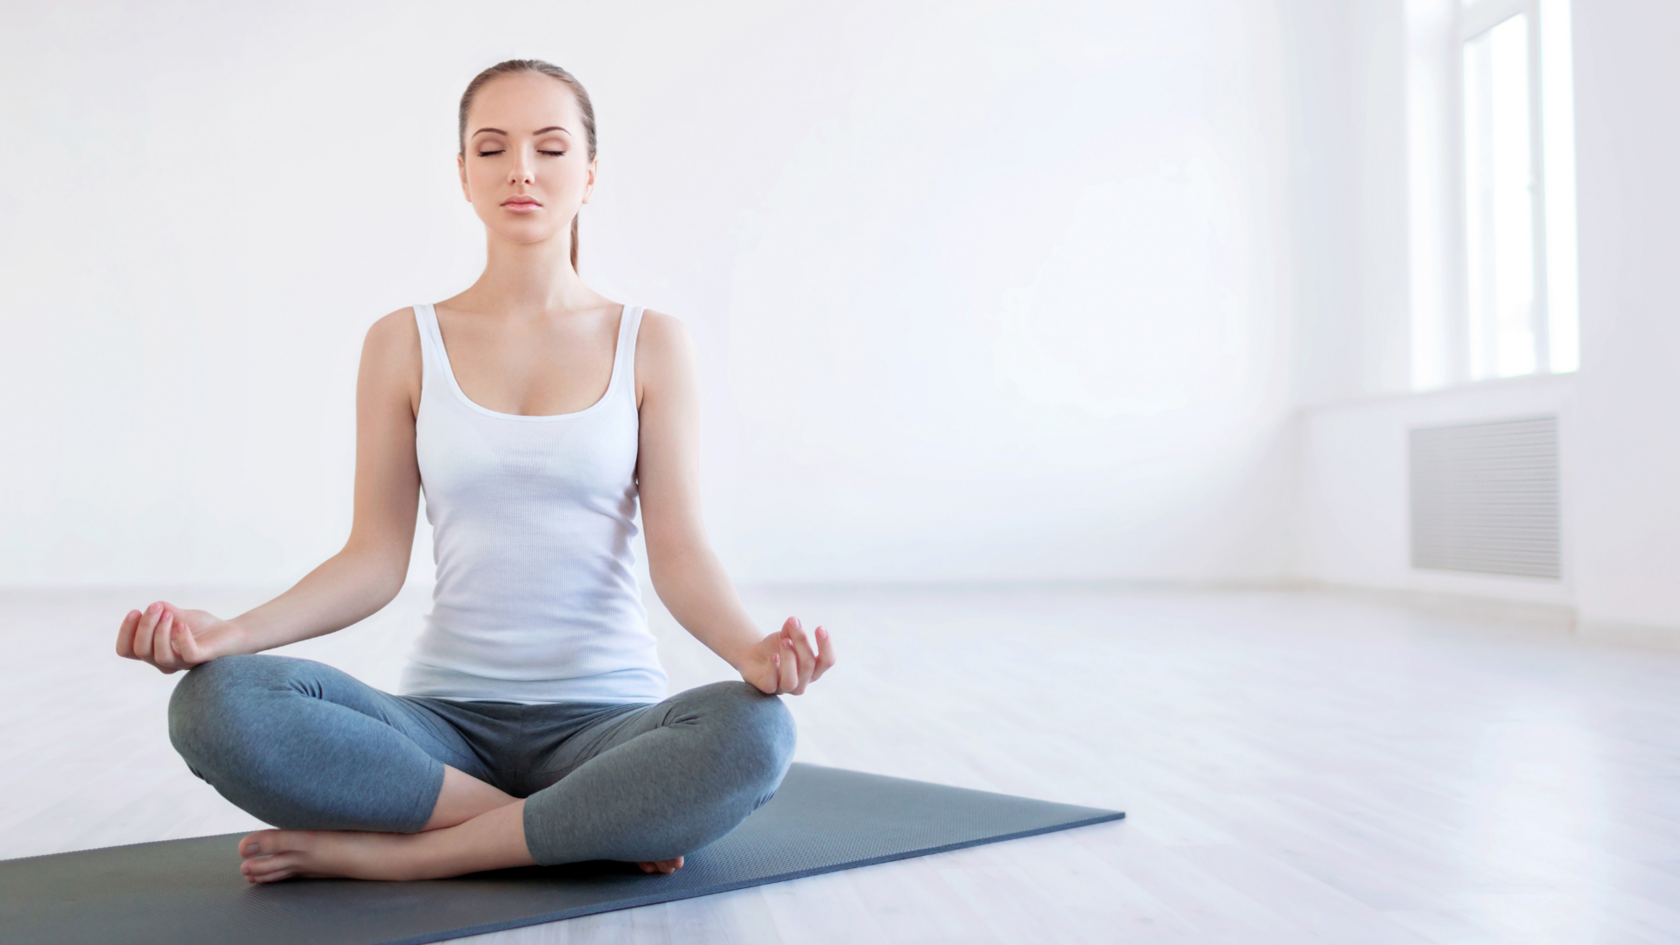 Медитация форум. Студия медитации. Девушка йога. Йога для женщин. Девушка медитирует.